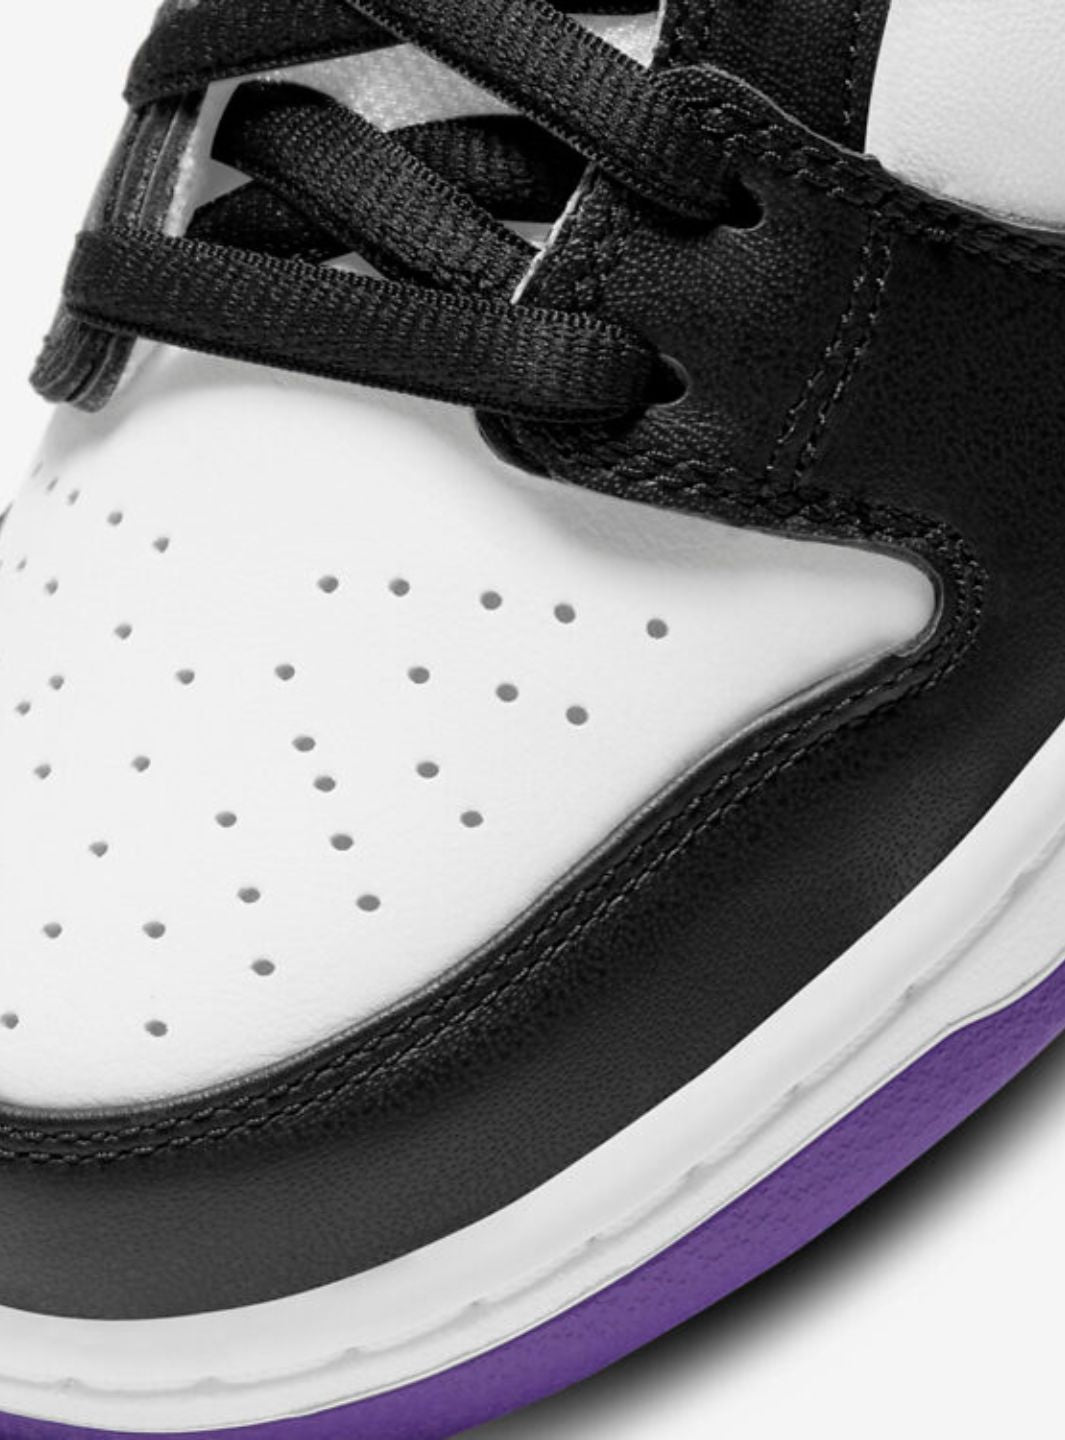 Nike SB Dunk Low Purple Black